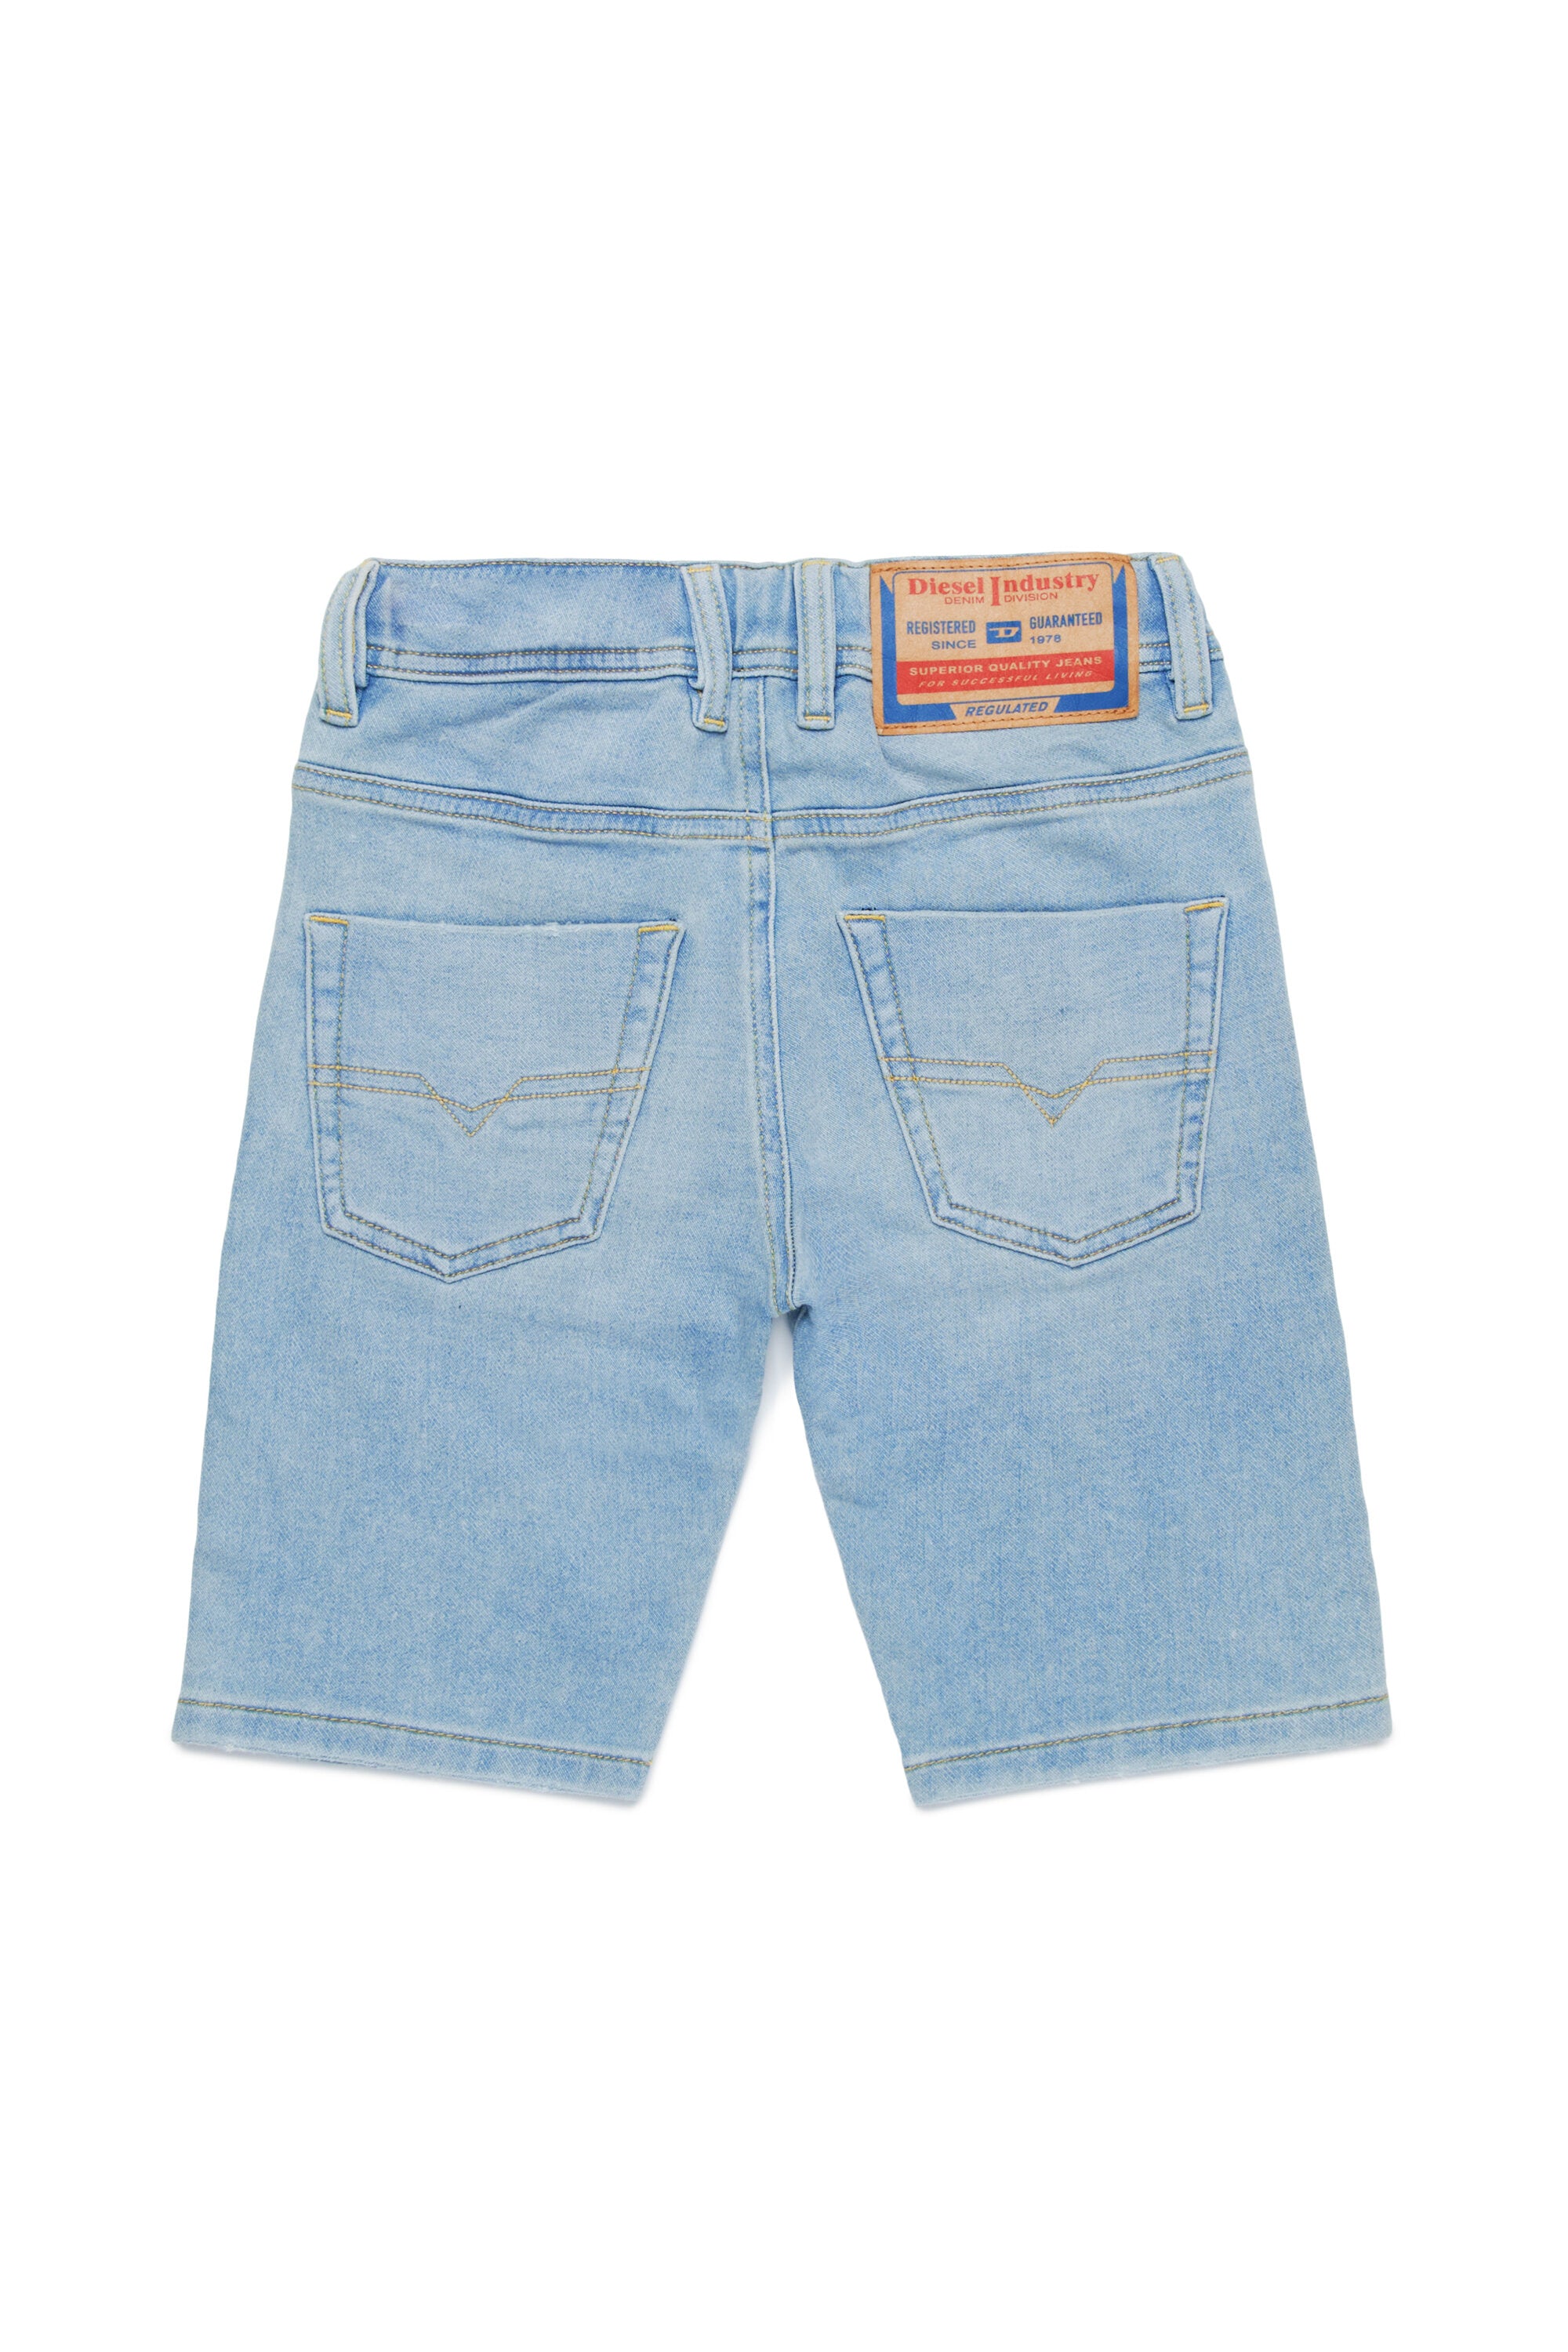 Pantalones cortos JoggJeans® en tono claro